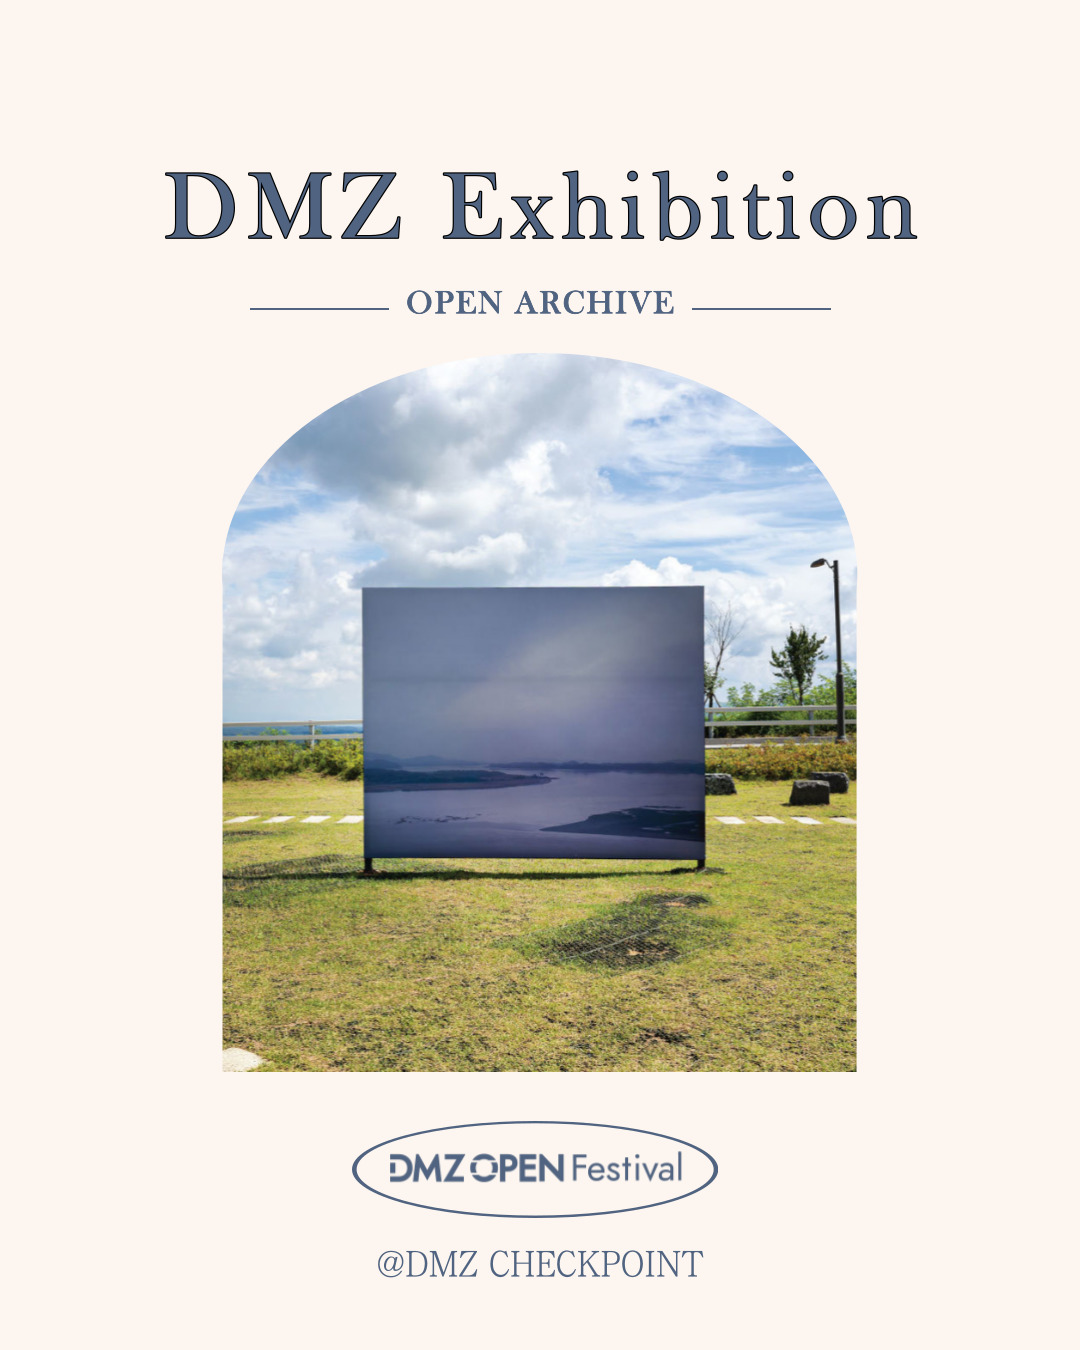 DMZ Exhibition(OPEN ARCHIVE). DMZ OPEN Festival. @DMZ CHECKPOINT